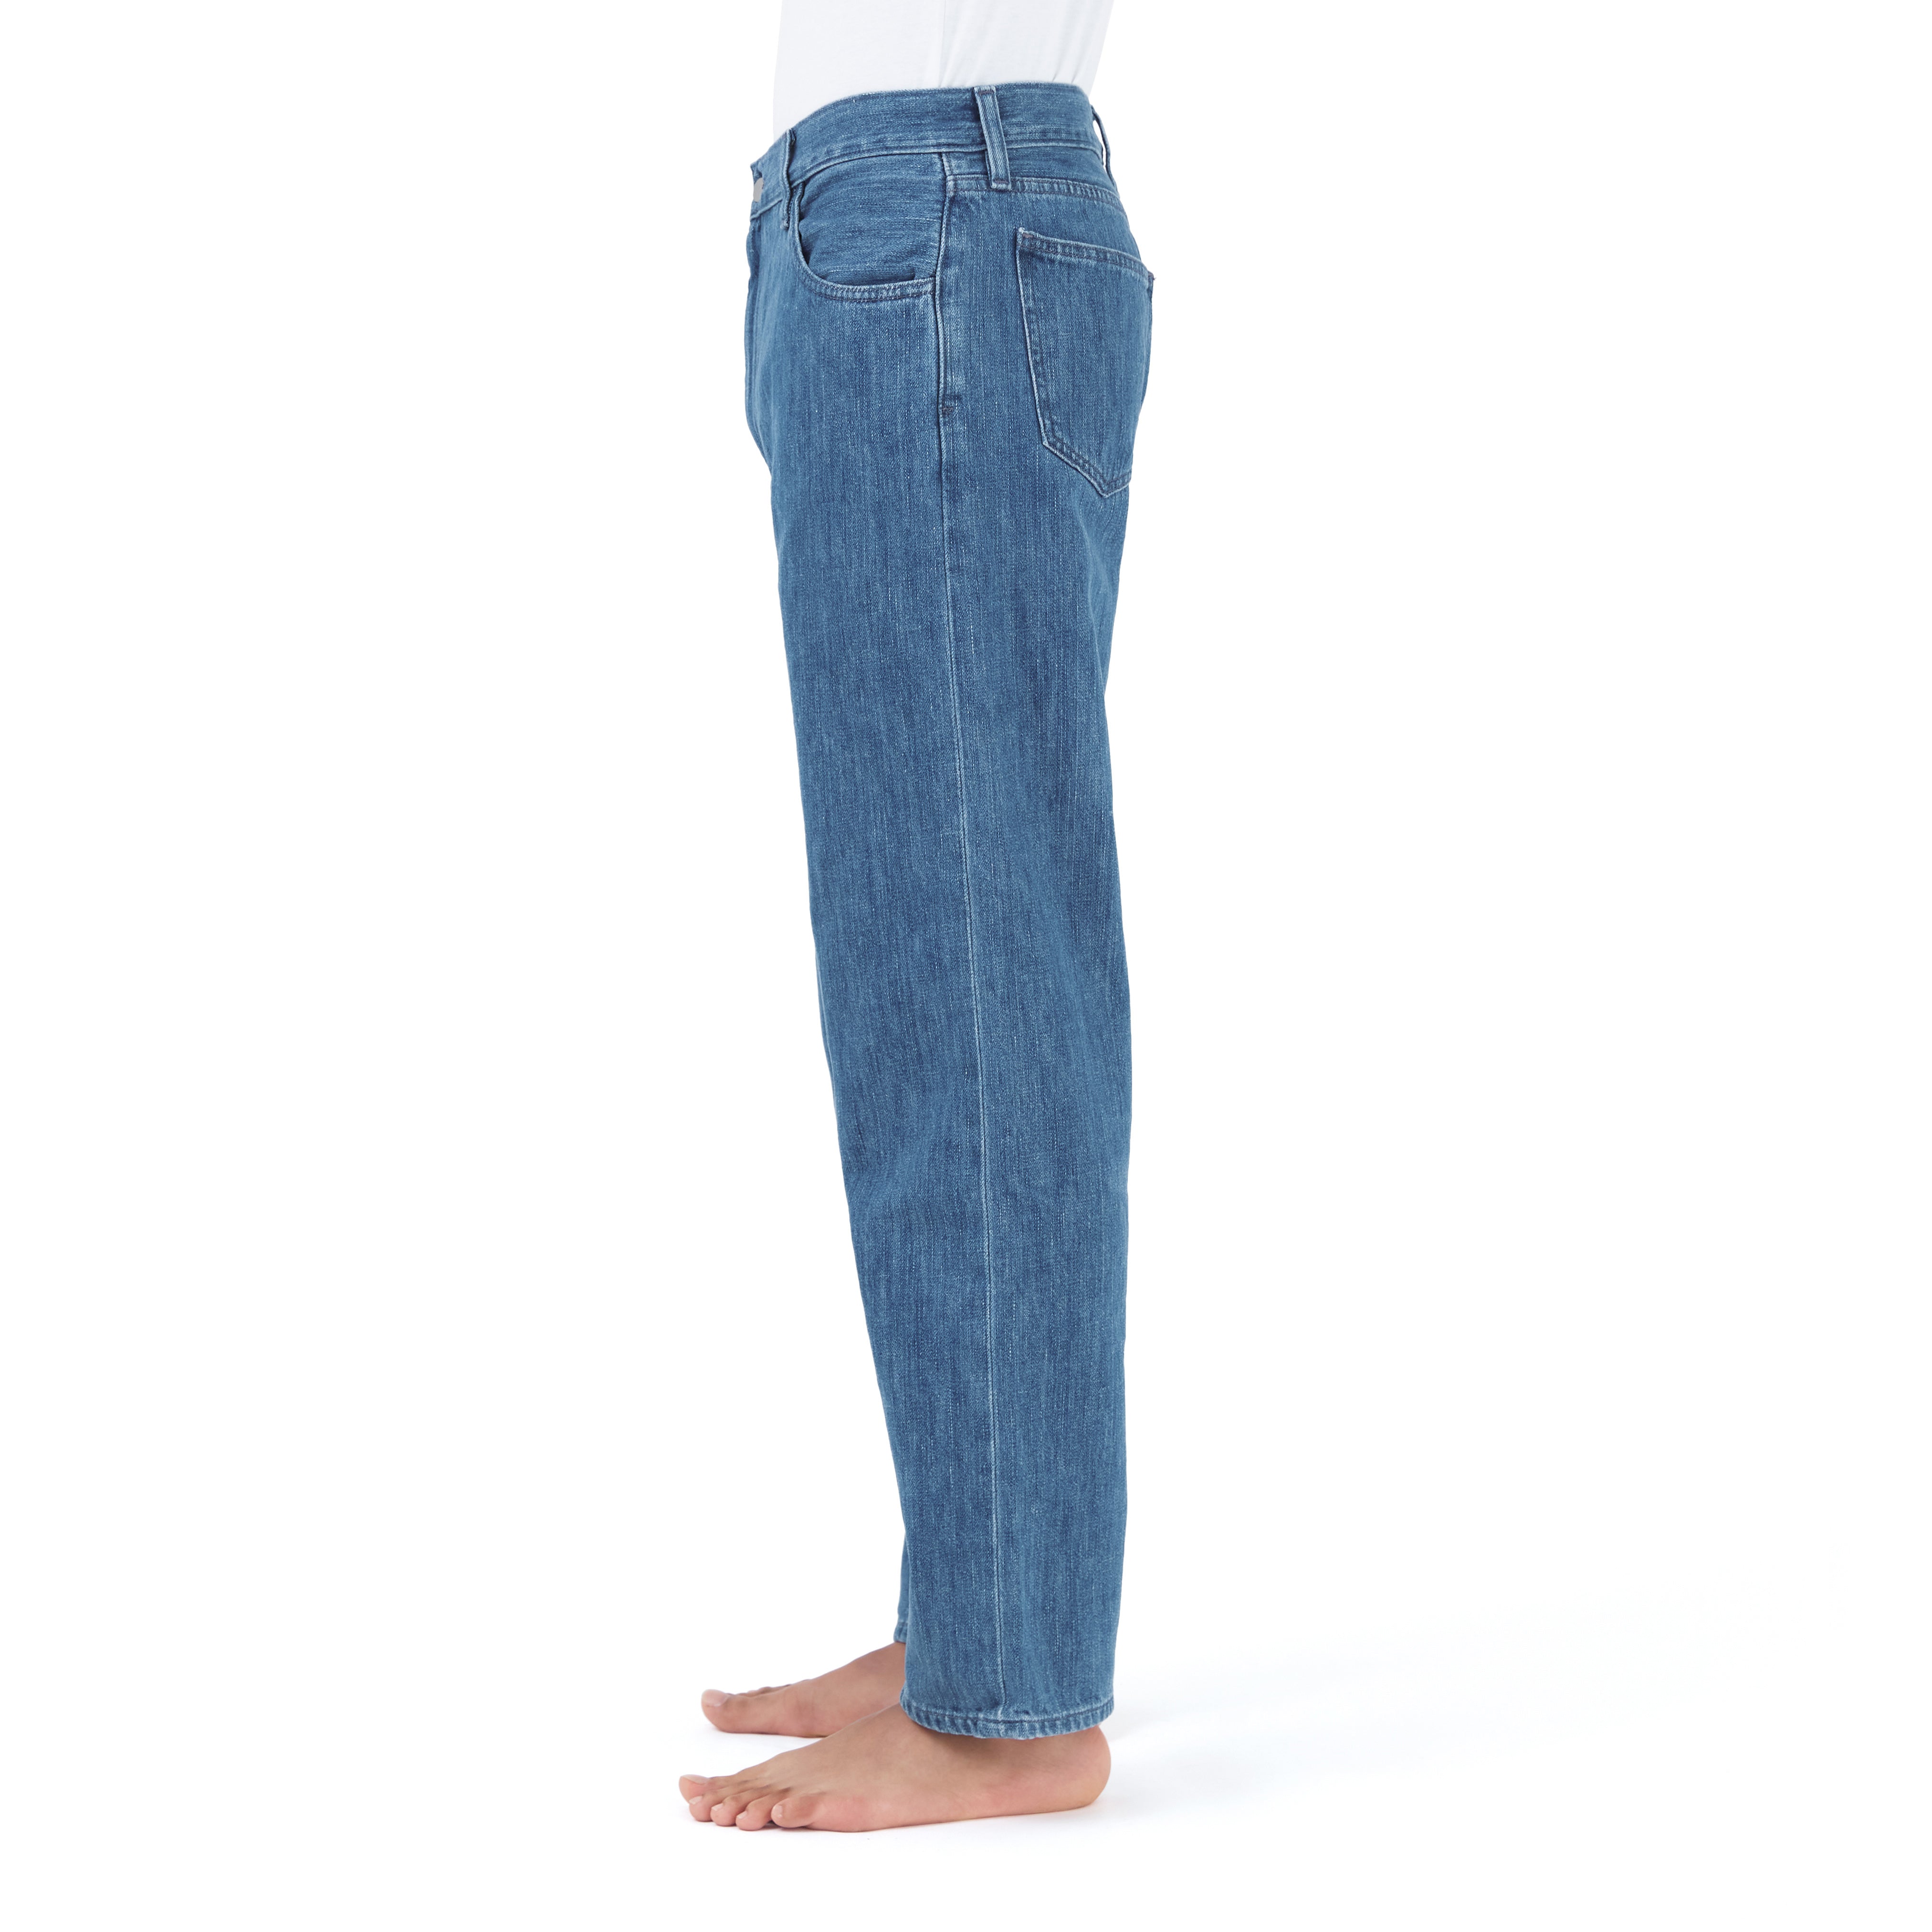 Ksubi Men's Readyset Relaxed Fit Jeans - Bergdorf Goodman